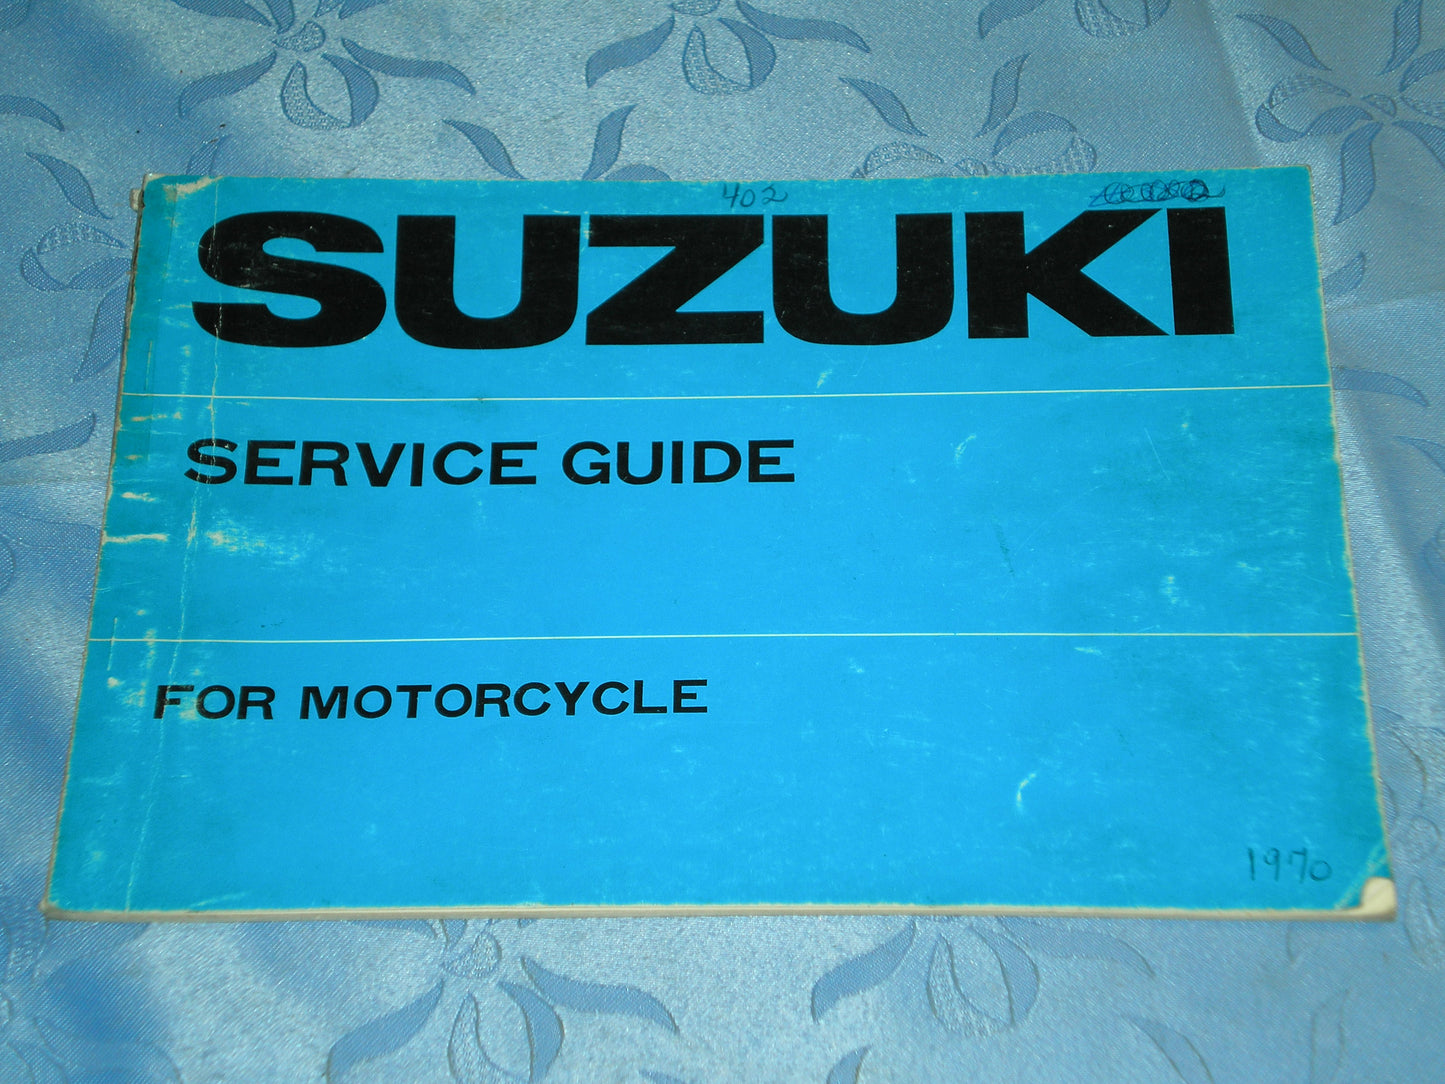 SUZUKI 1971   Motorcycle Service Guide Manual  #402